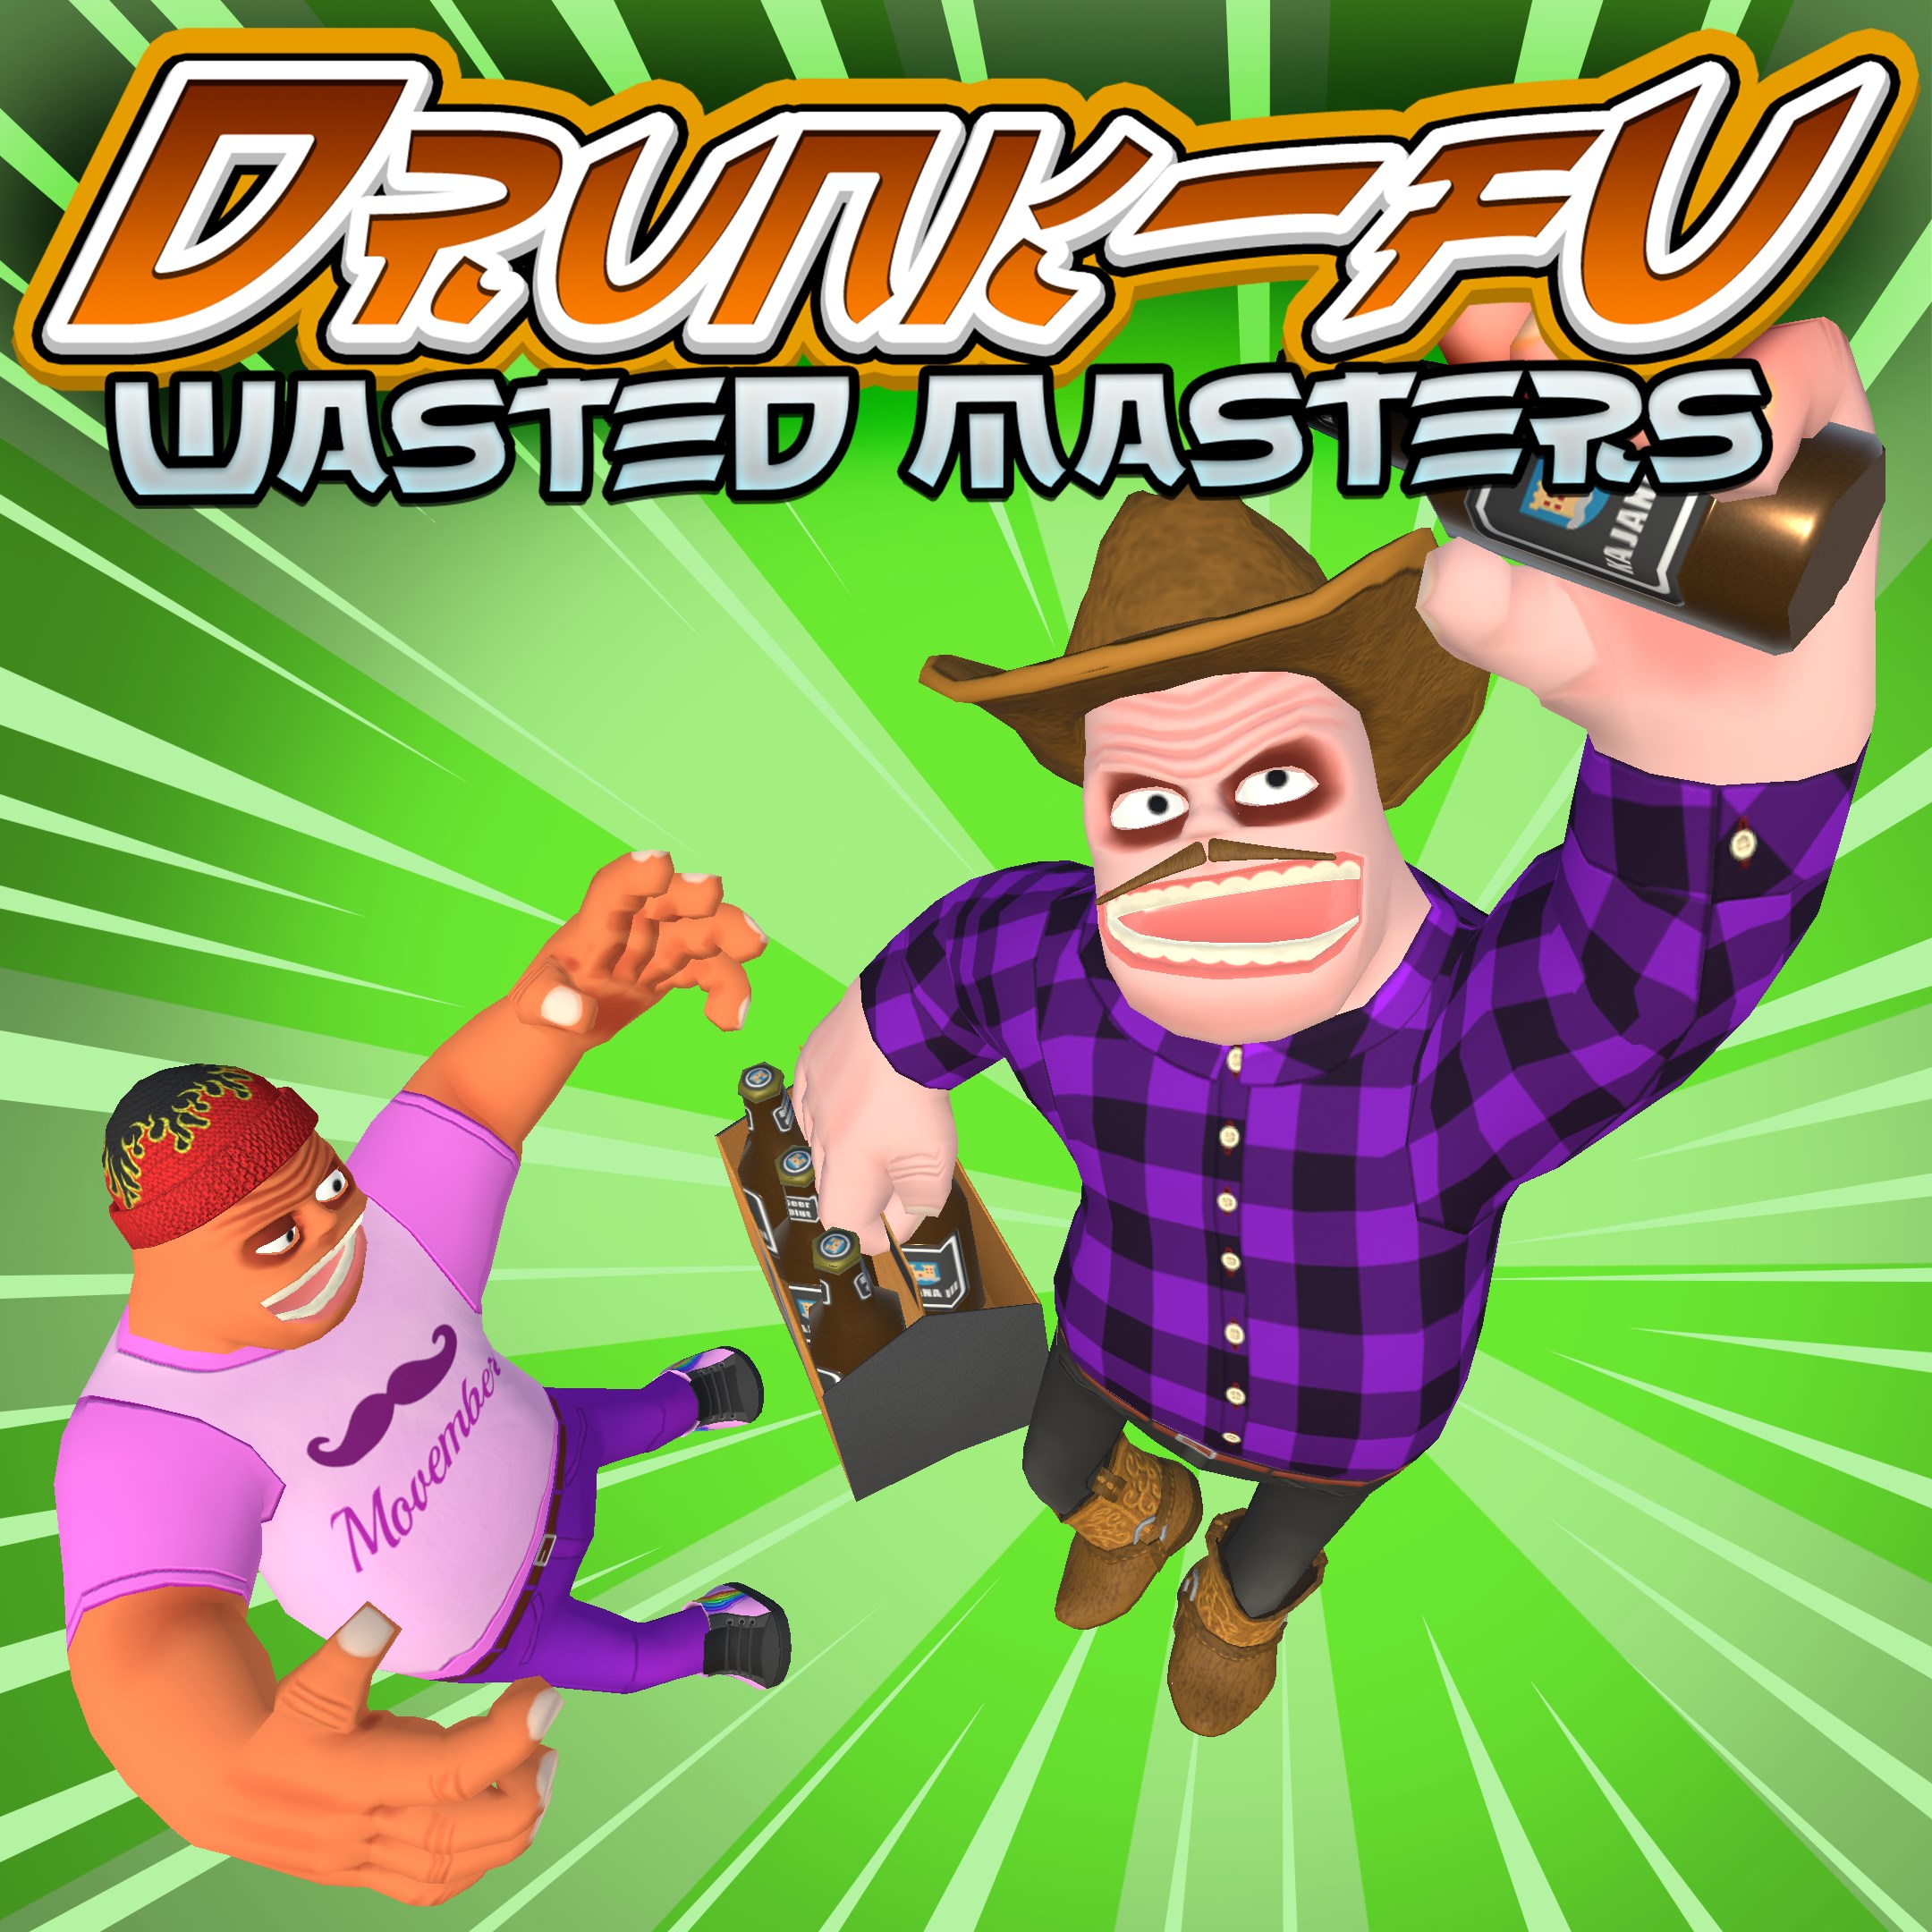 Masters play s. Drunken Master игра. Дранк фу. Drunk-Fu: wasted Masters. Drunk Fu wasted Masters 2.